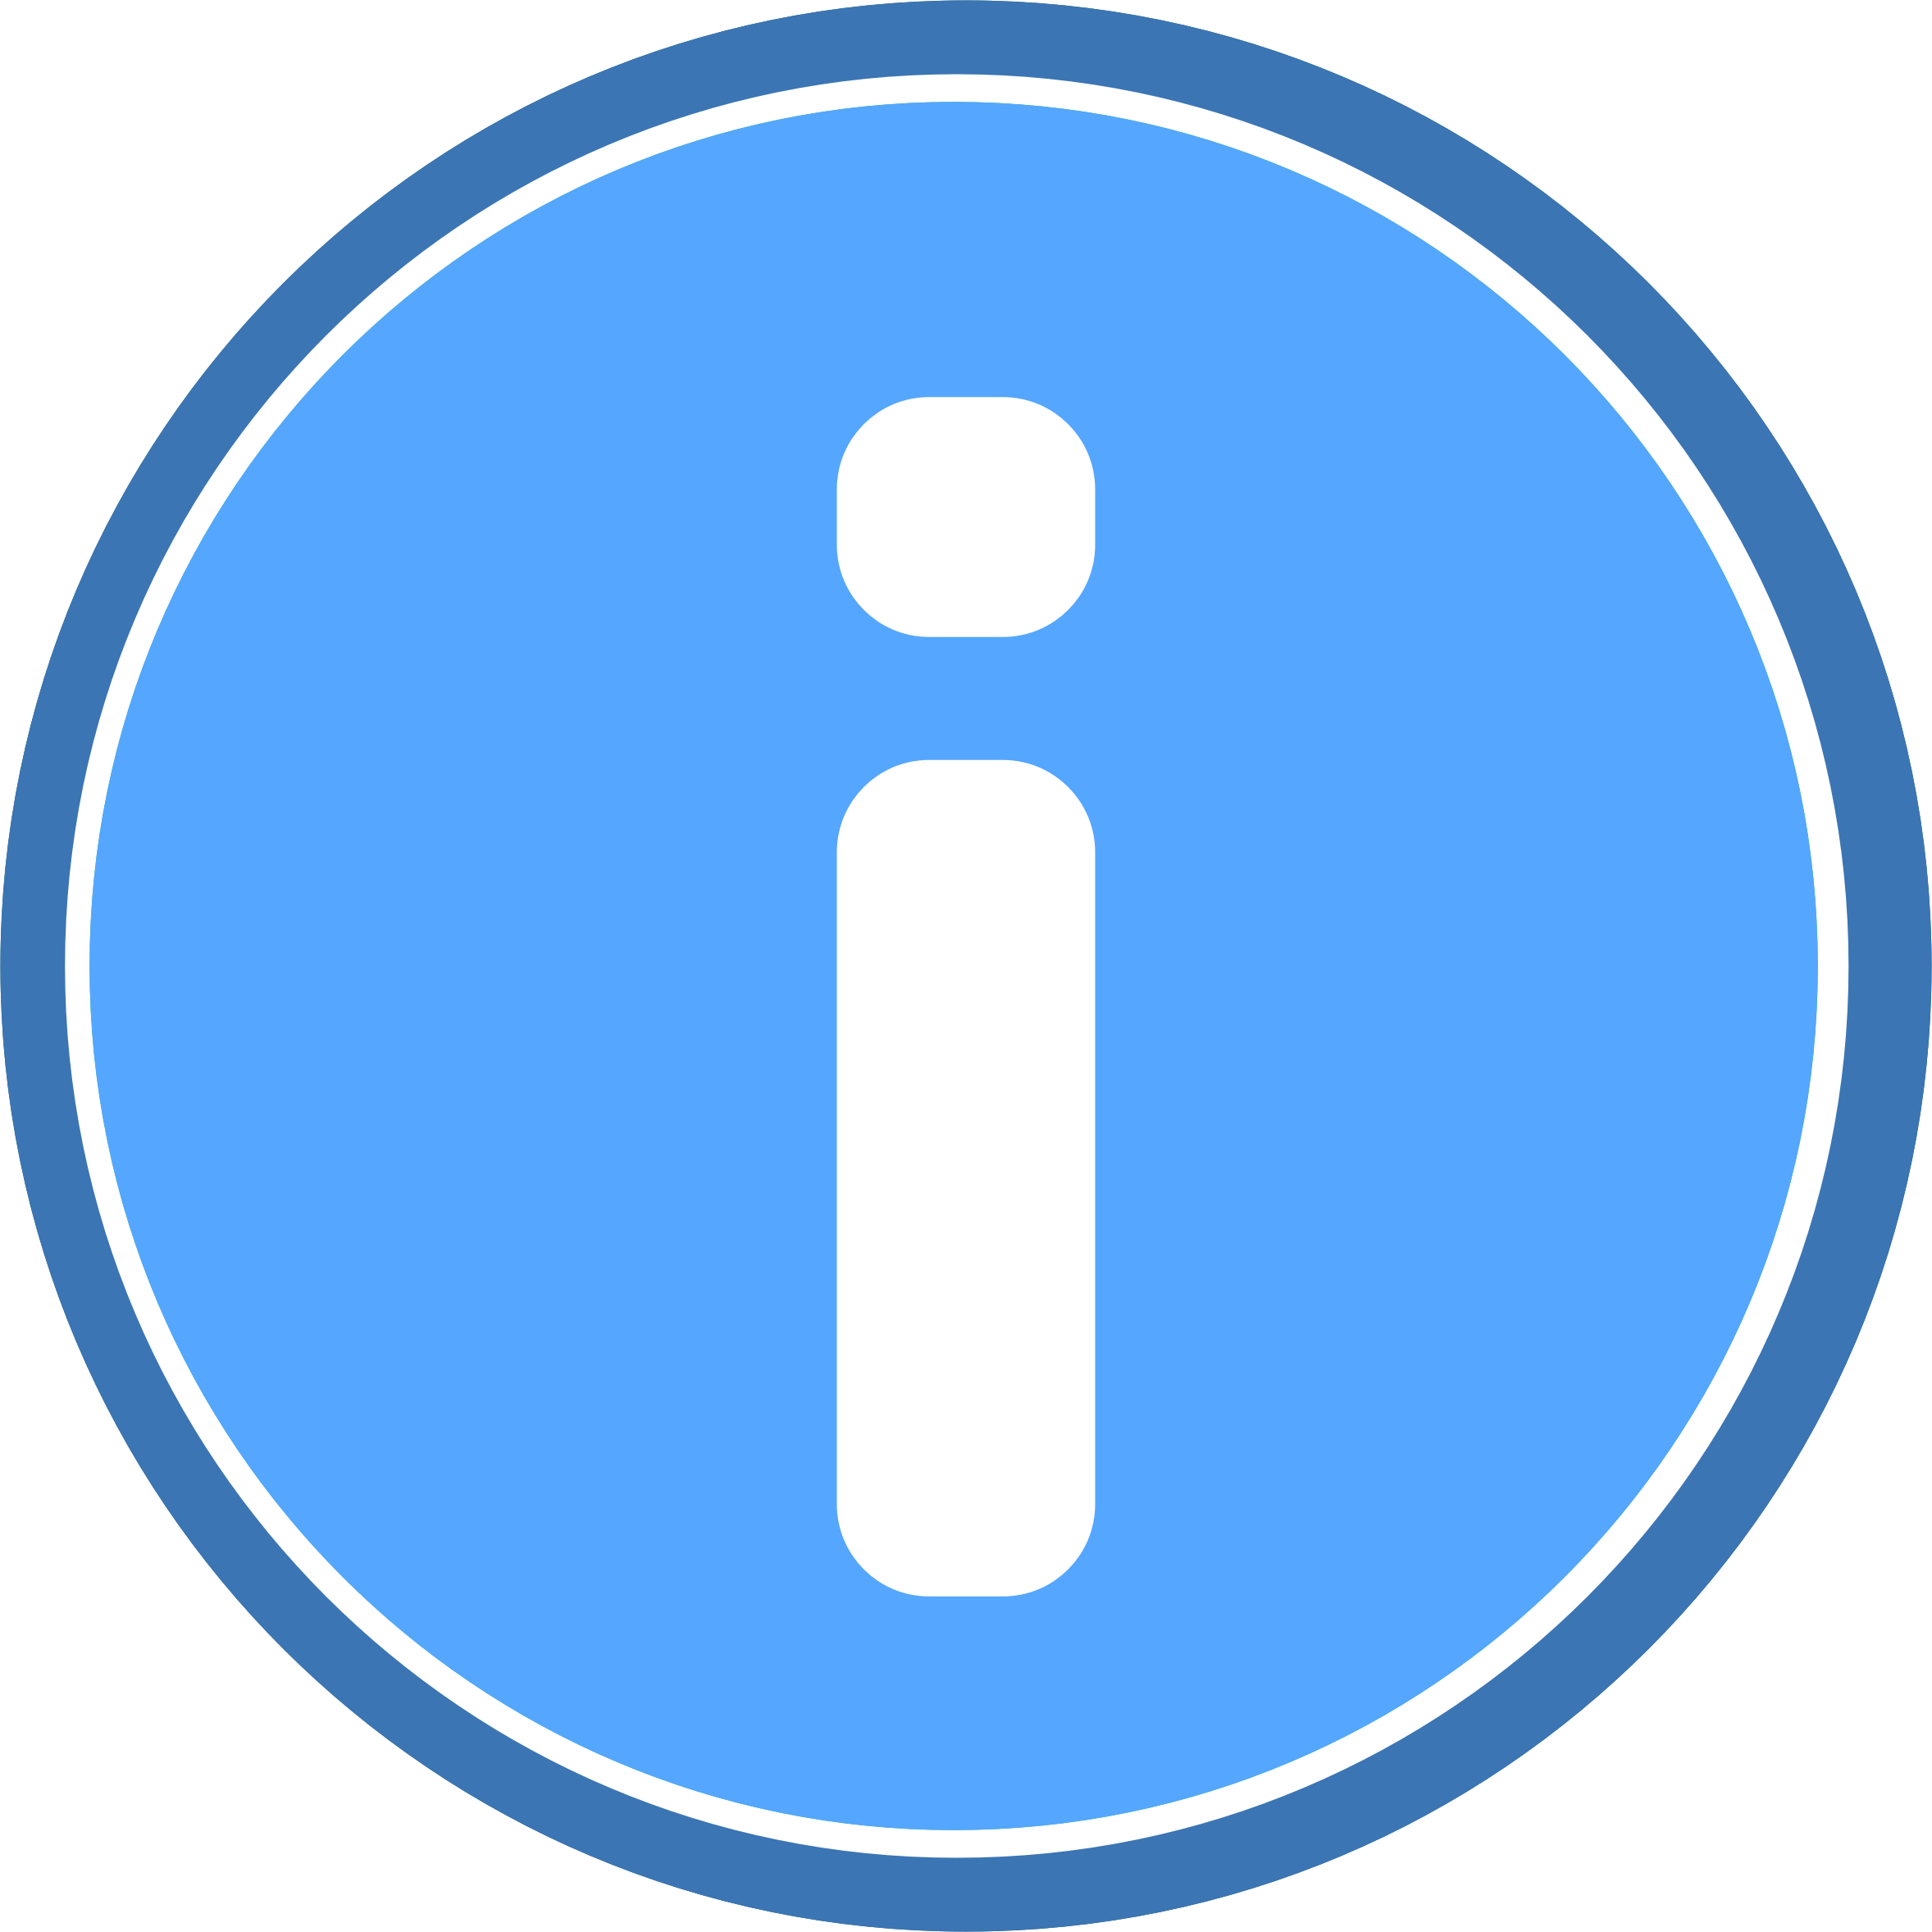 Computer Icons Information Angle Logo Brand.